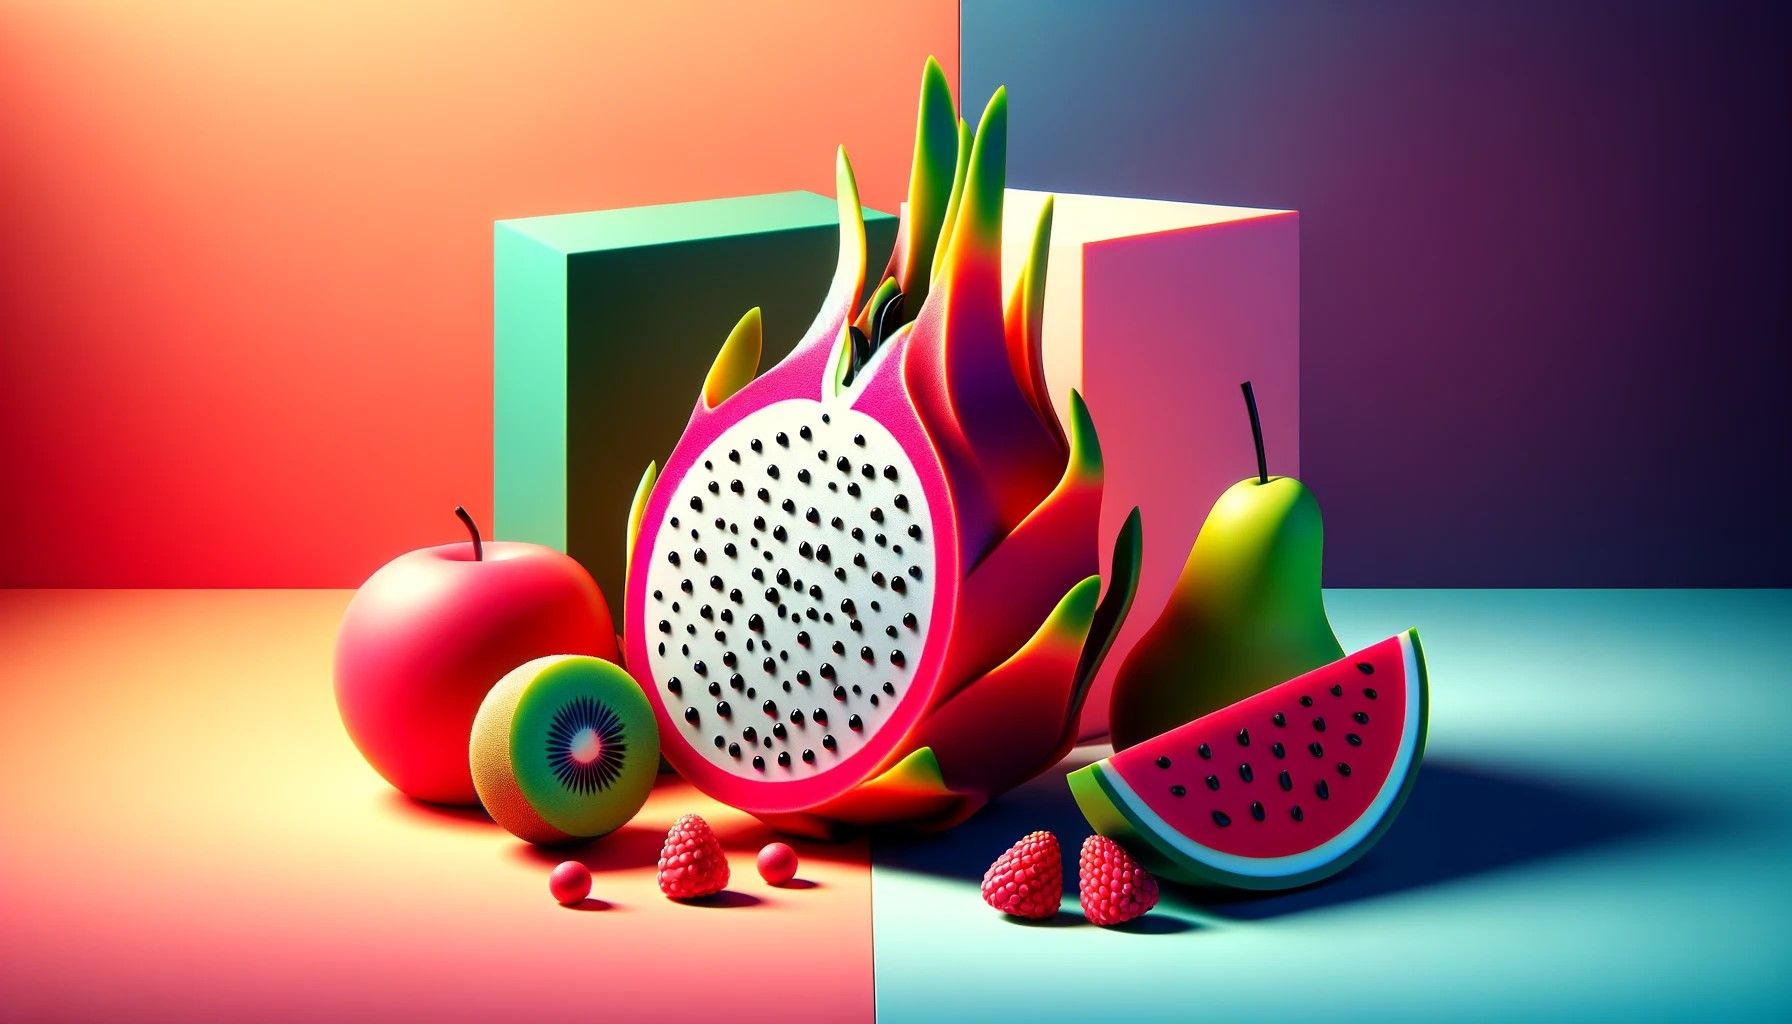 A colorful 3D minimalist art representation of dragon fruit's taste profile.